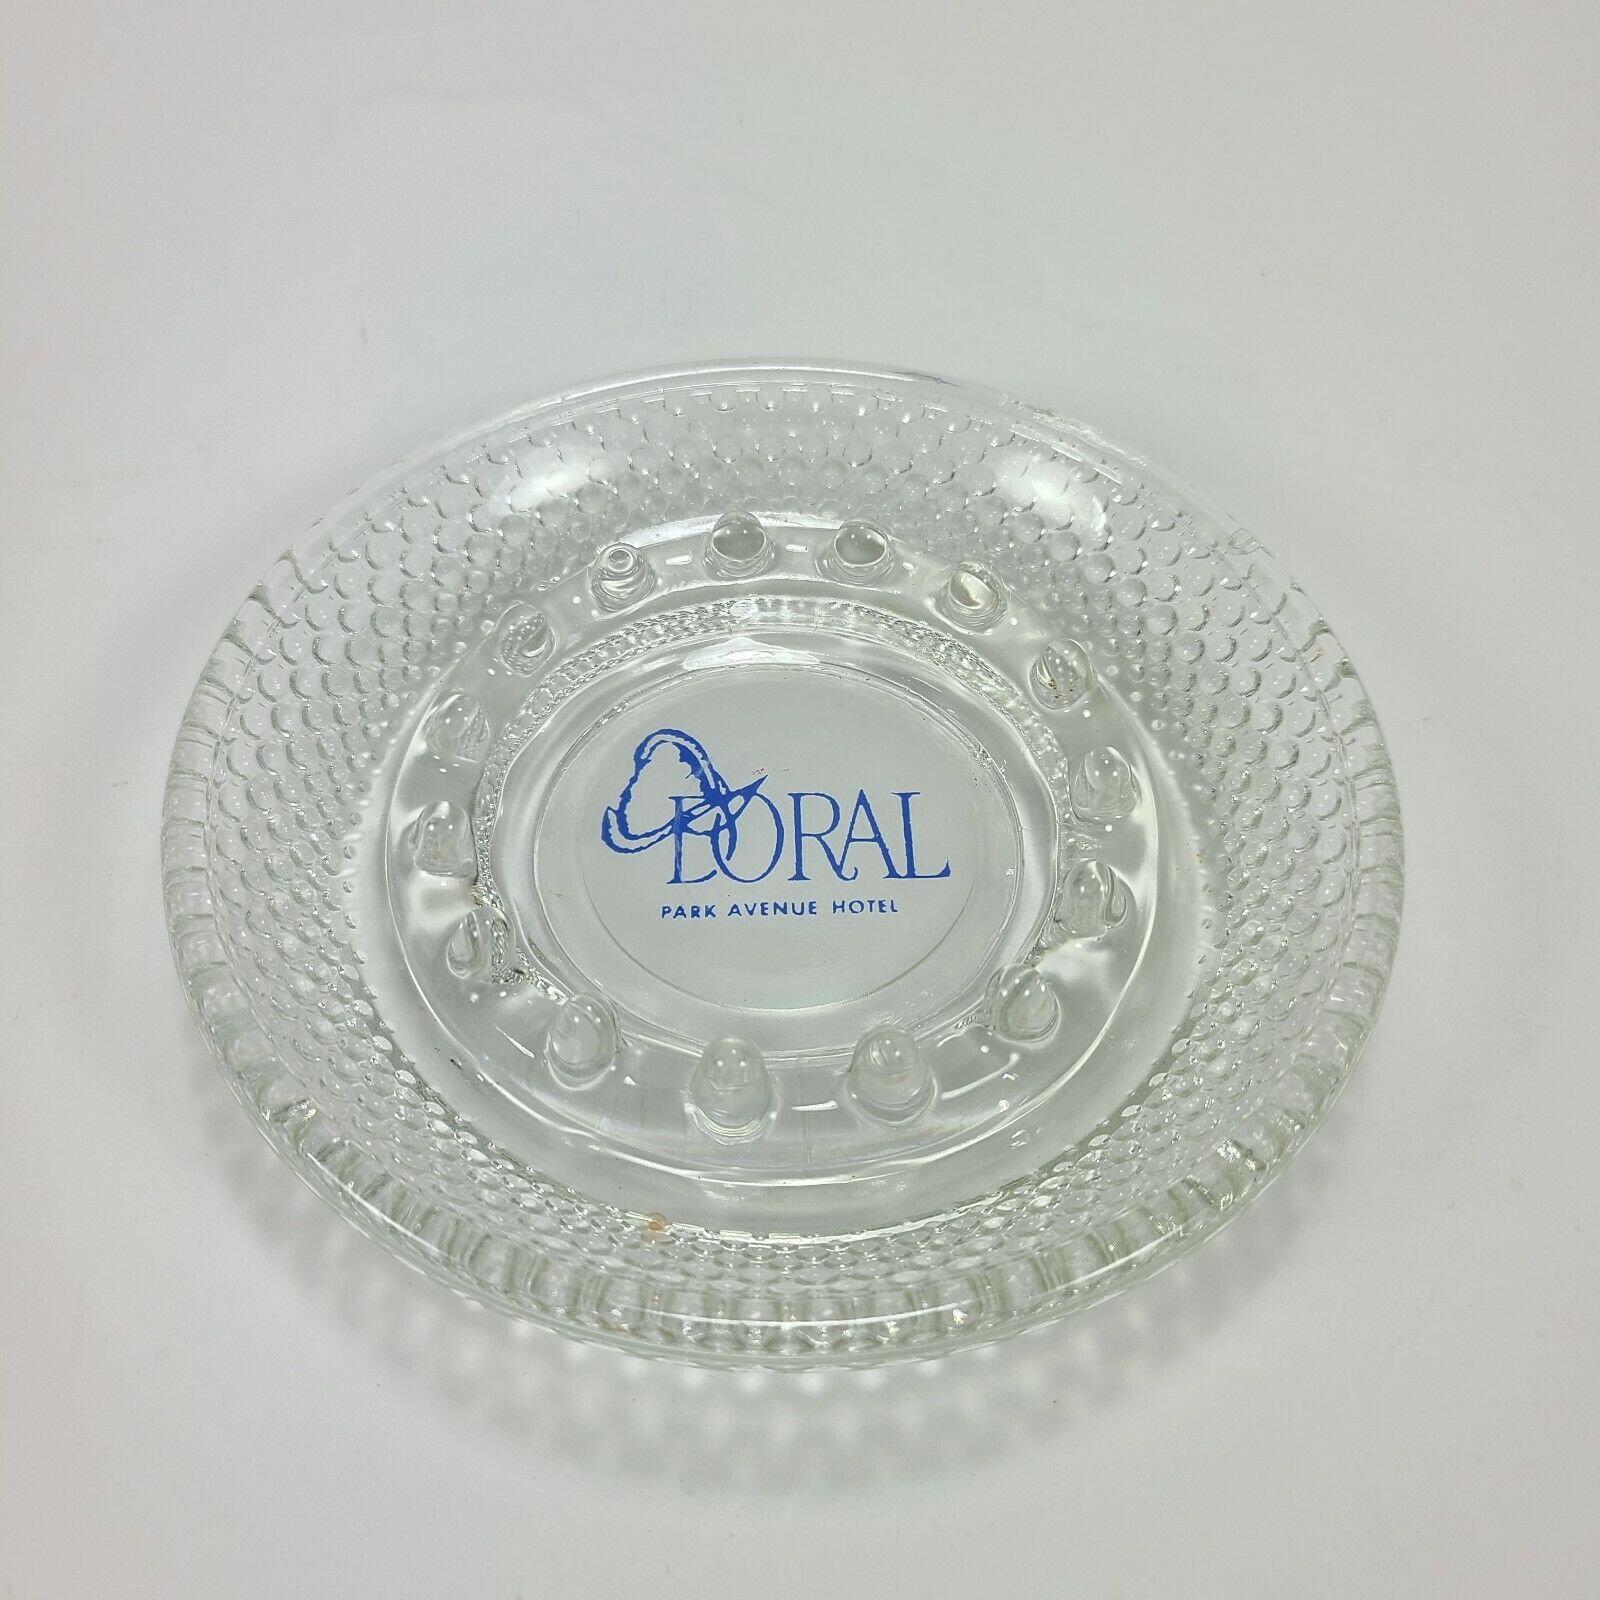 Vintage Glass Doral Park Avenue New York City Hotel Ashtray Trinket Dish